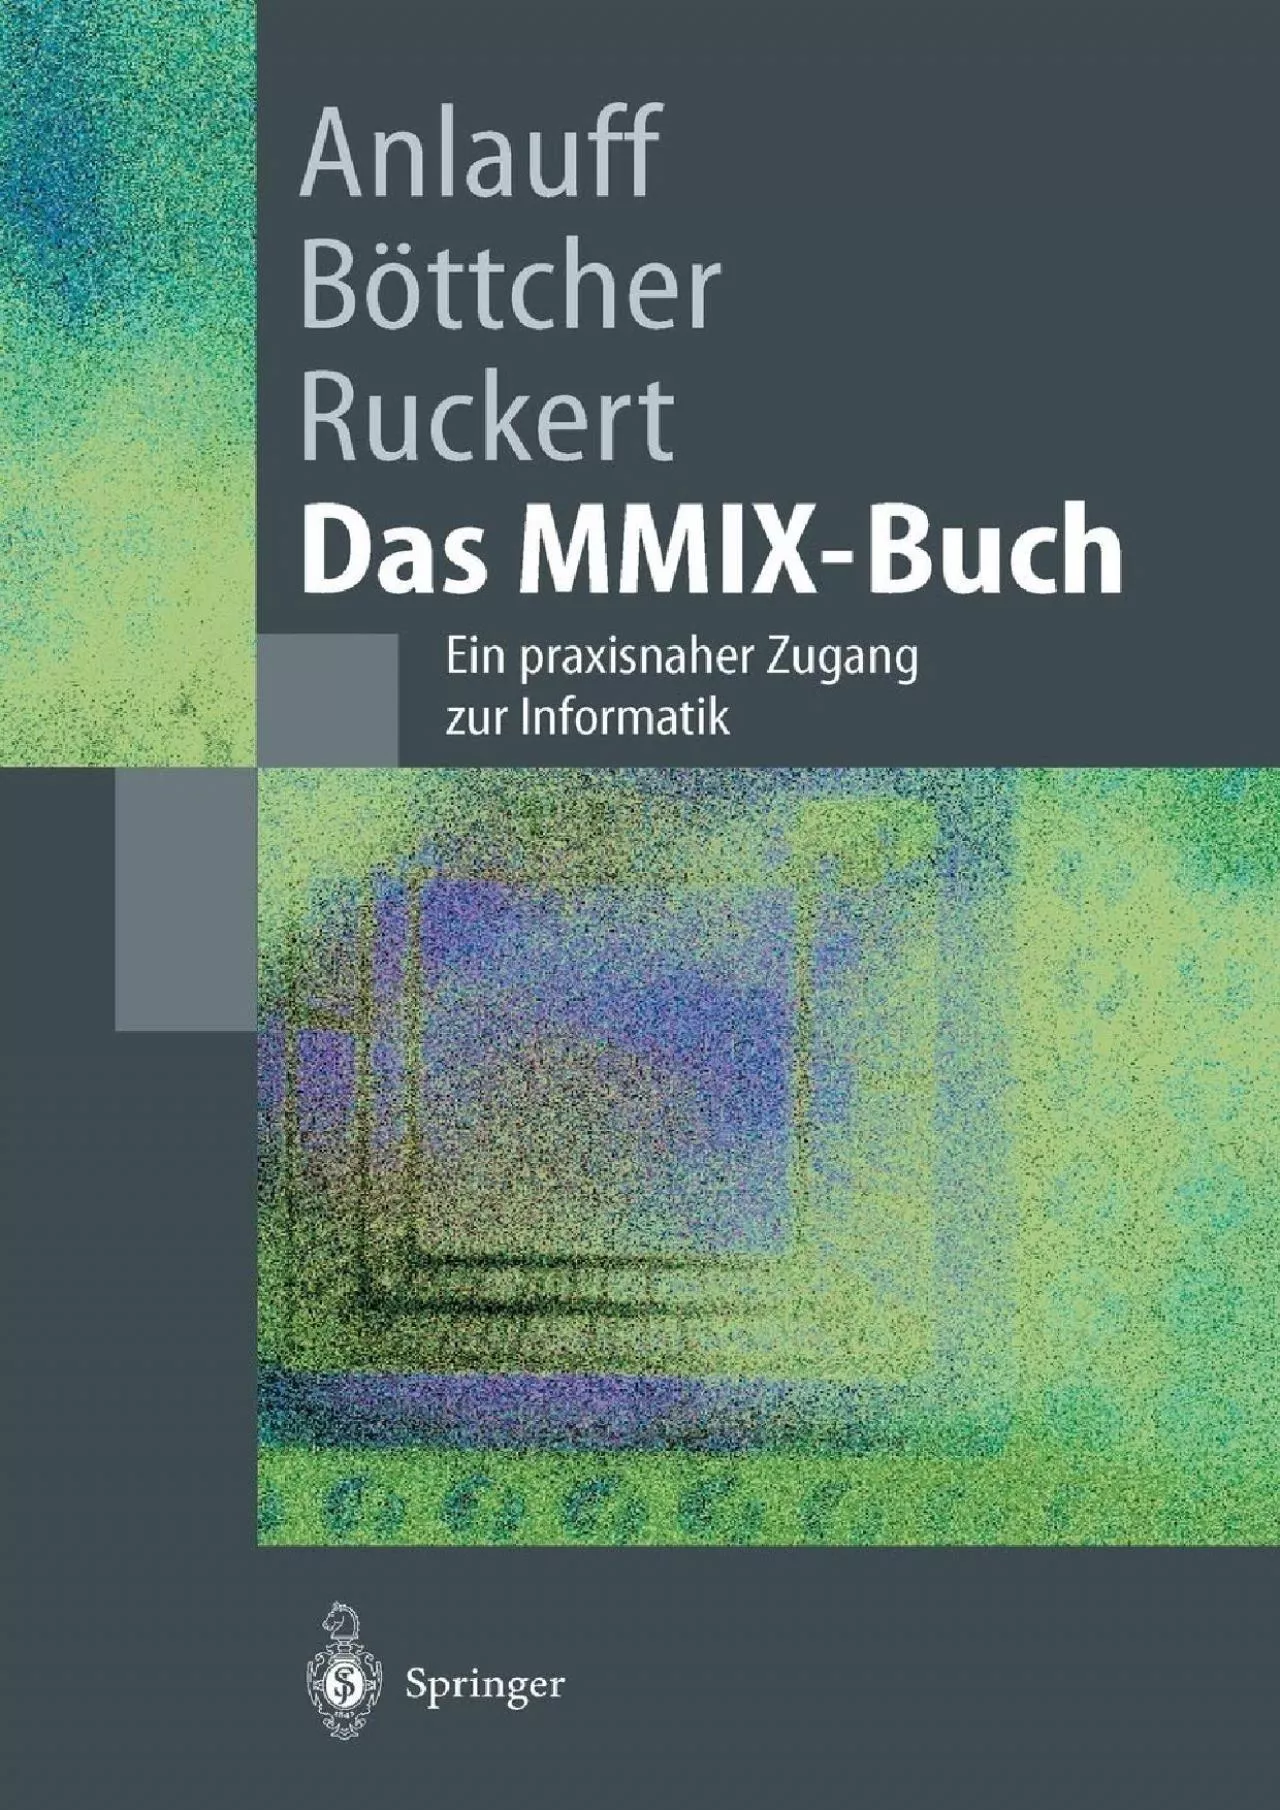 (BOOS)-Das MMIX-Buch: Ein praxisnaher Zugang zur Informatik (Springer-Lehrbuch) (German